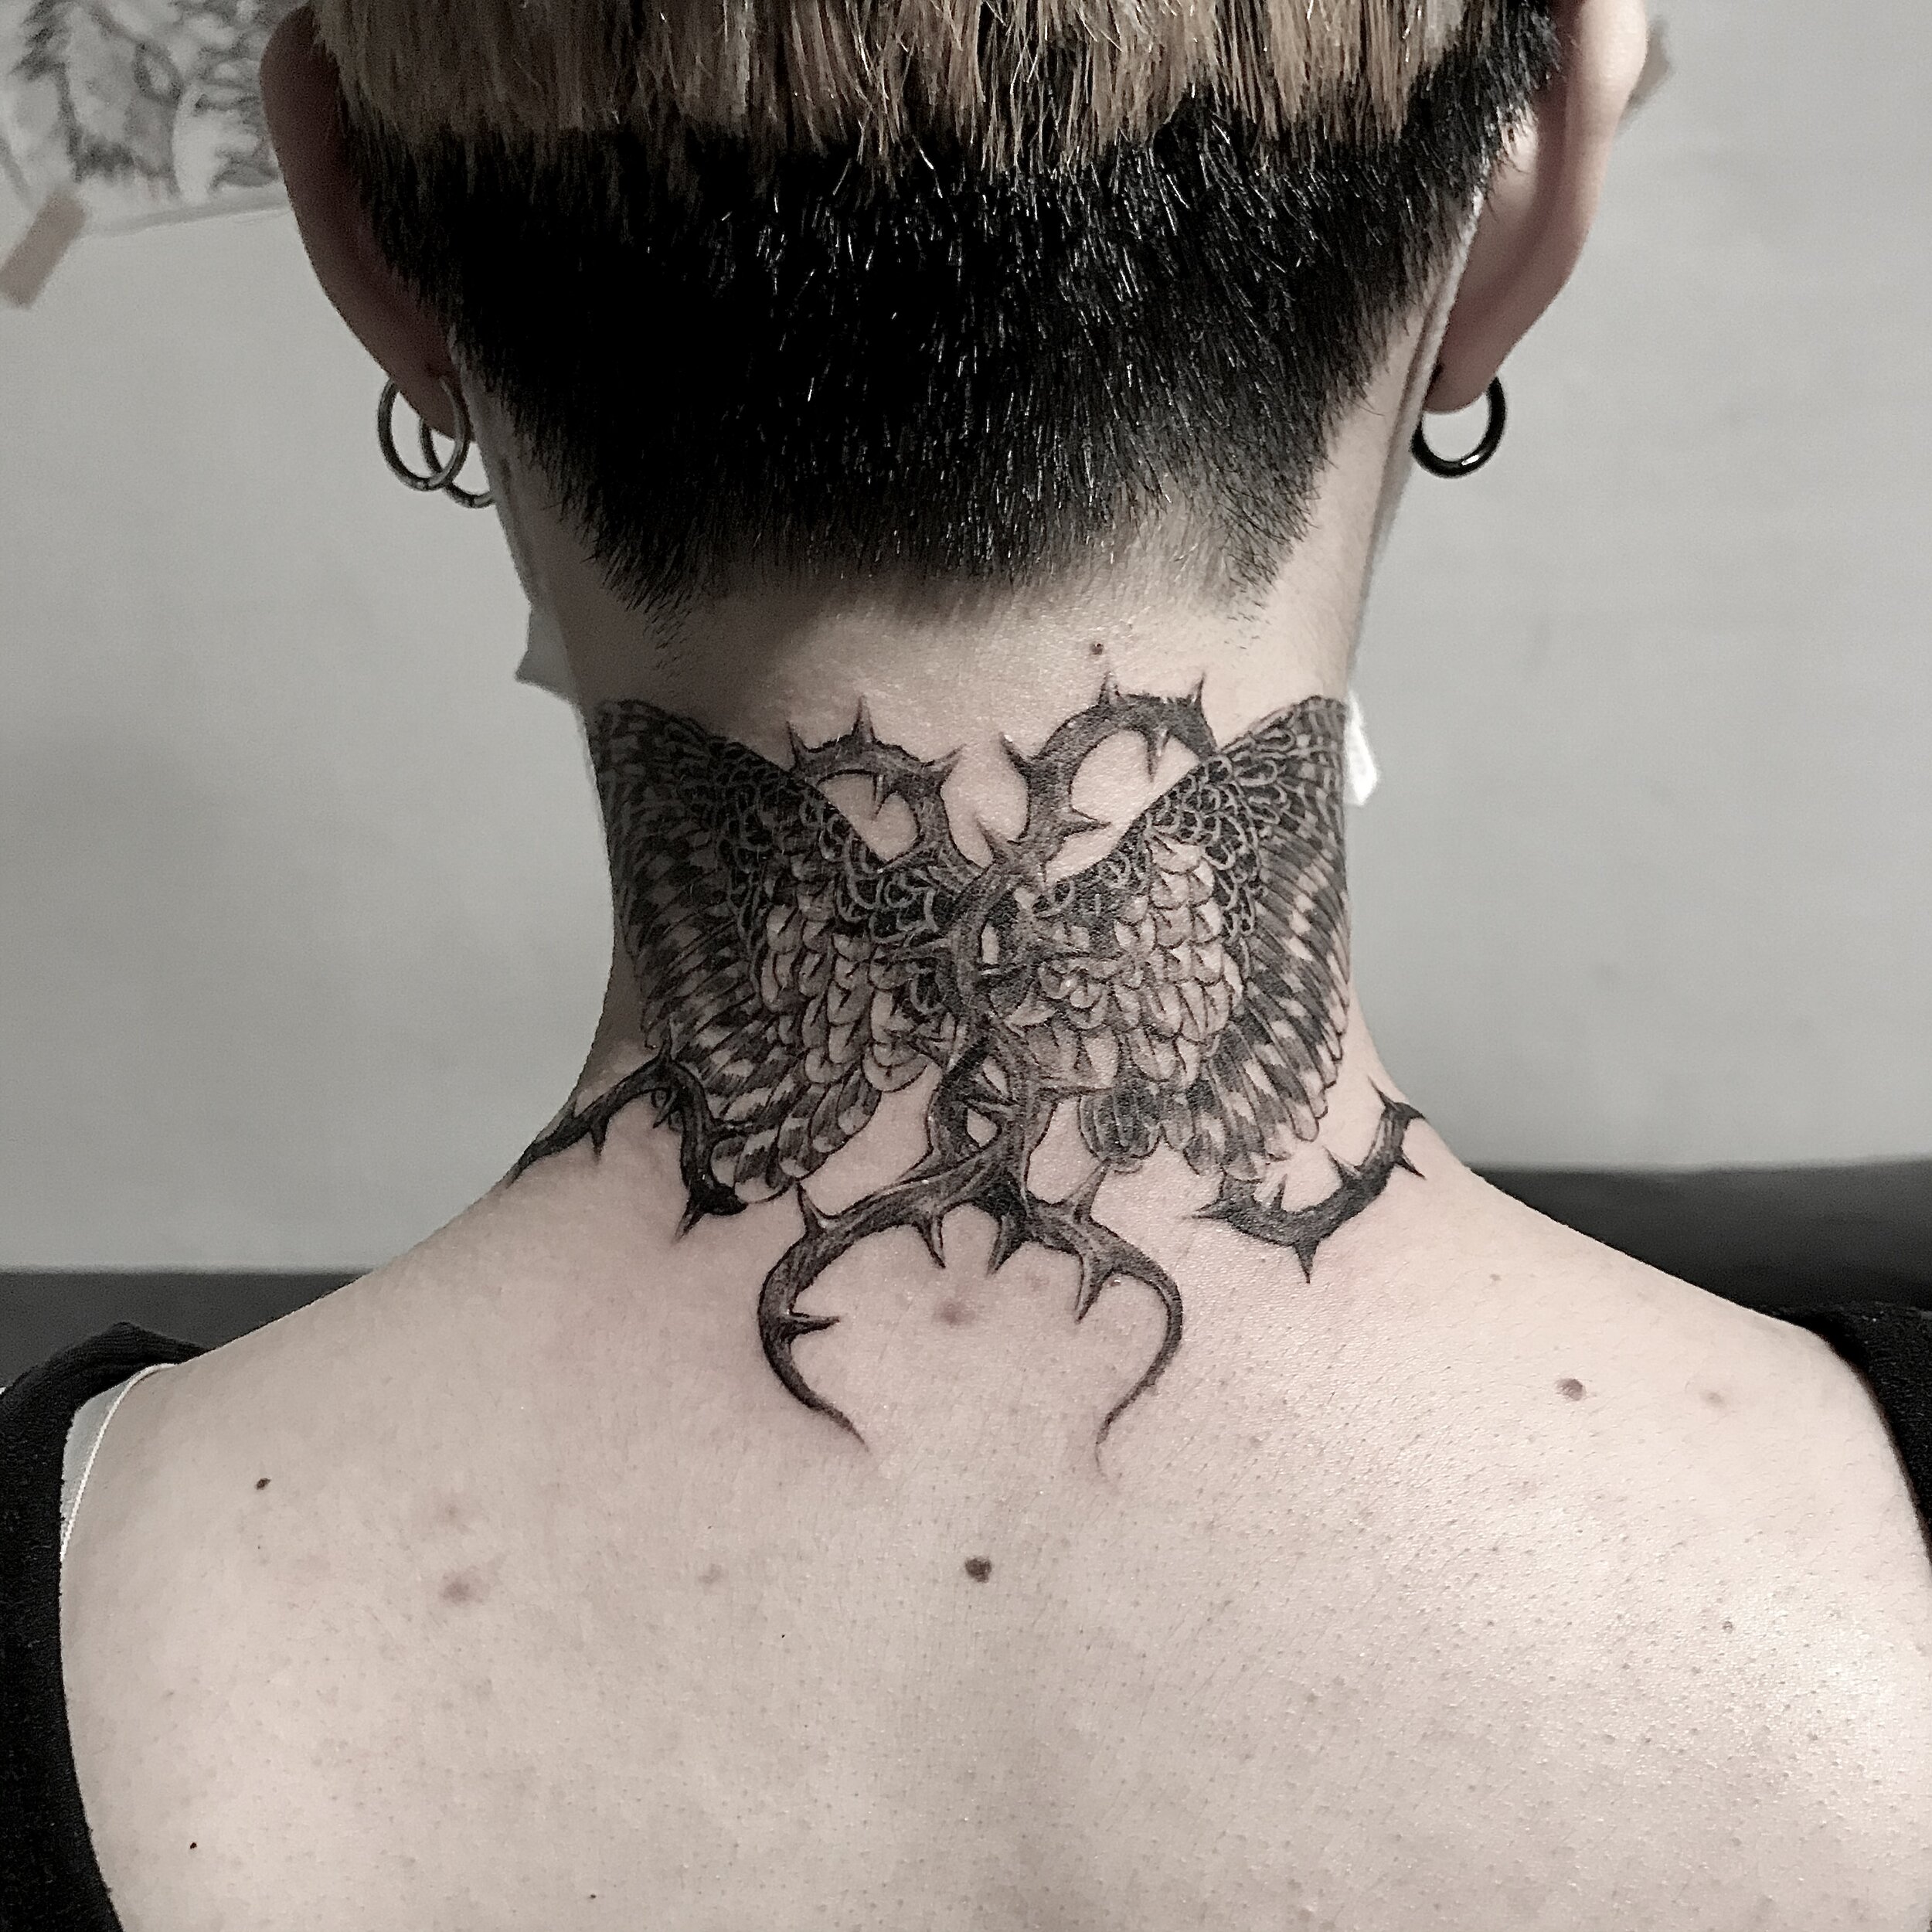  Dark Wings done by Bea at Black Thorn Tattoo in Menasha WI   rtattoo